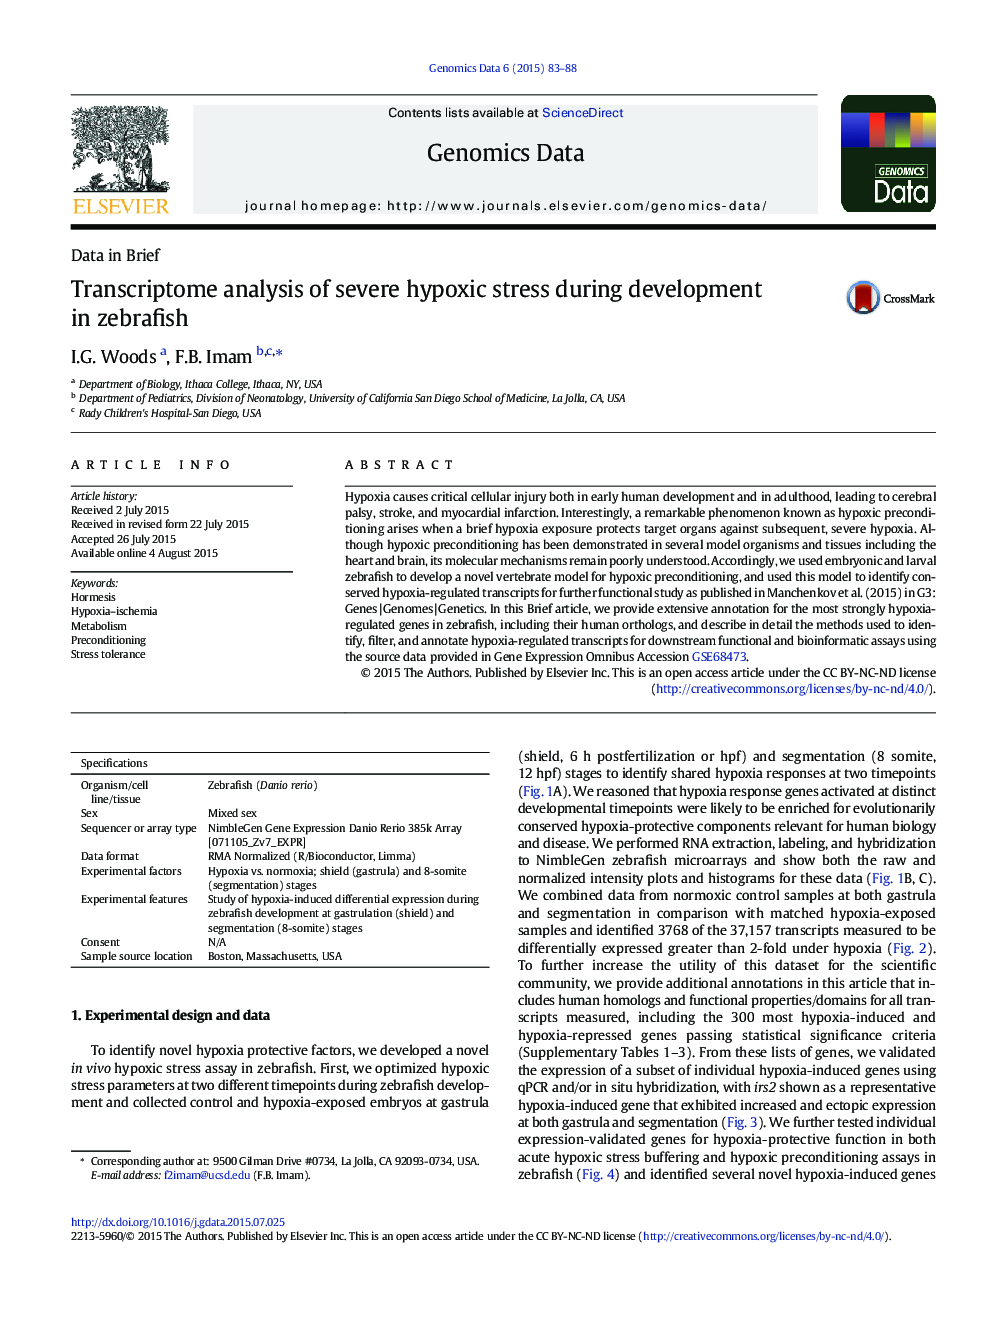 Transcriptome analysis of severe hypoxic stress during development in zebrafish